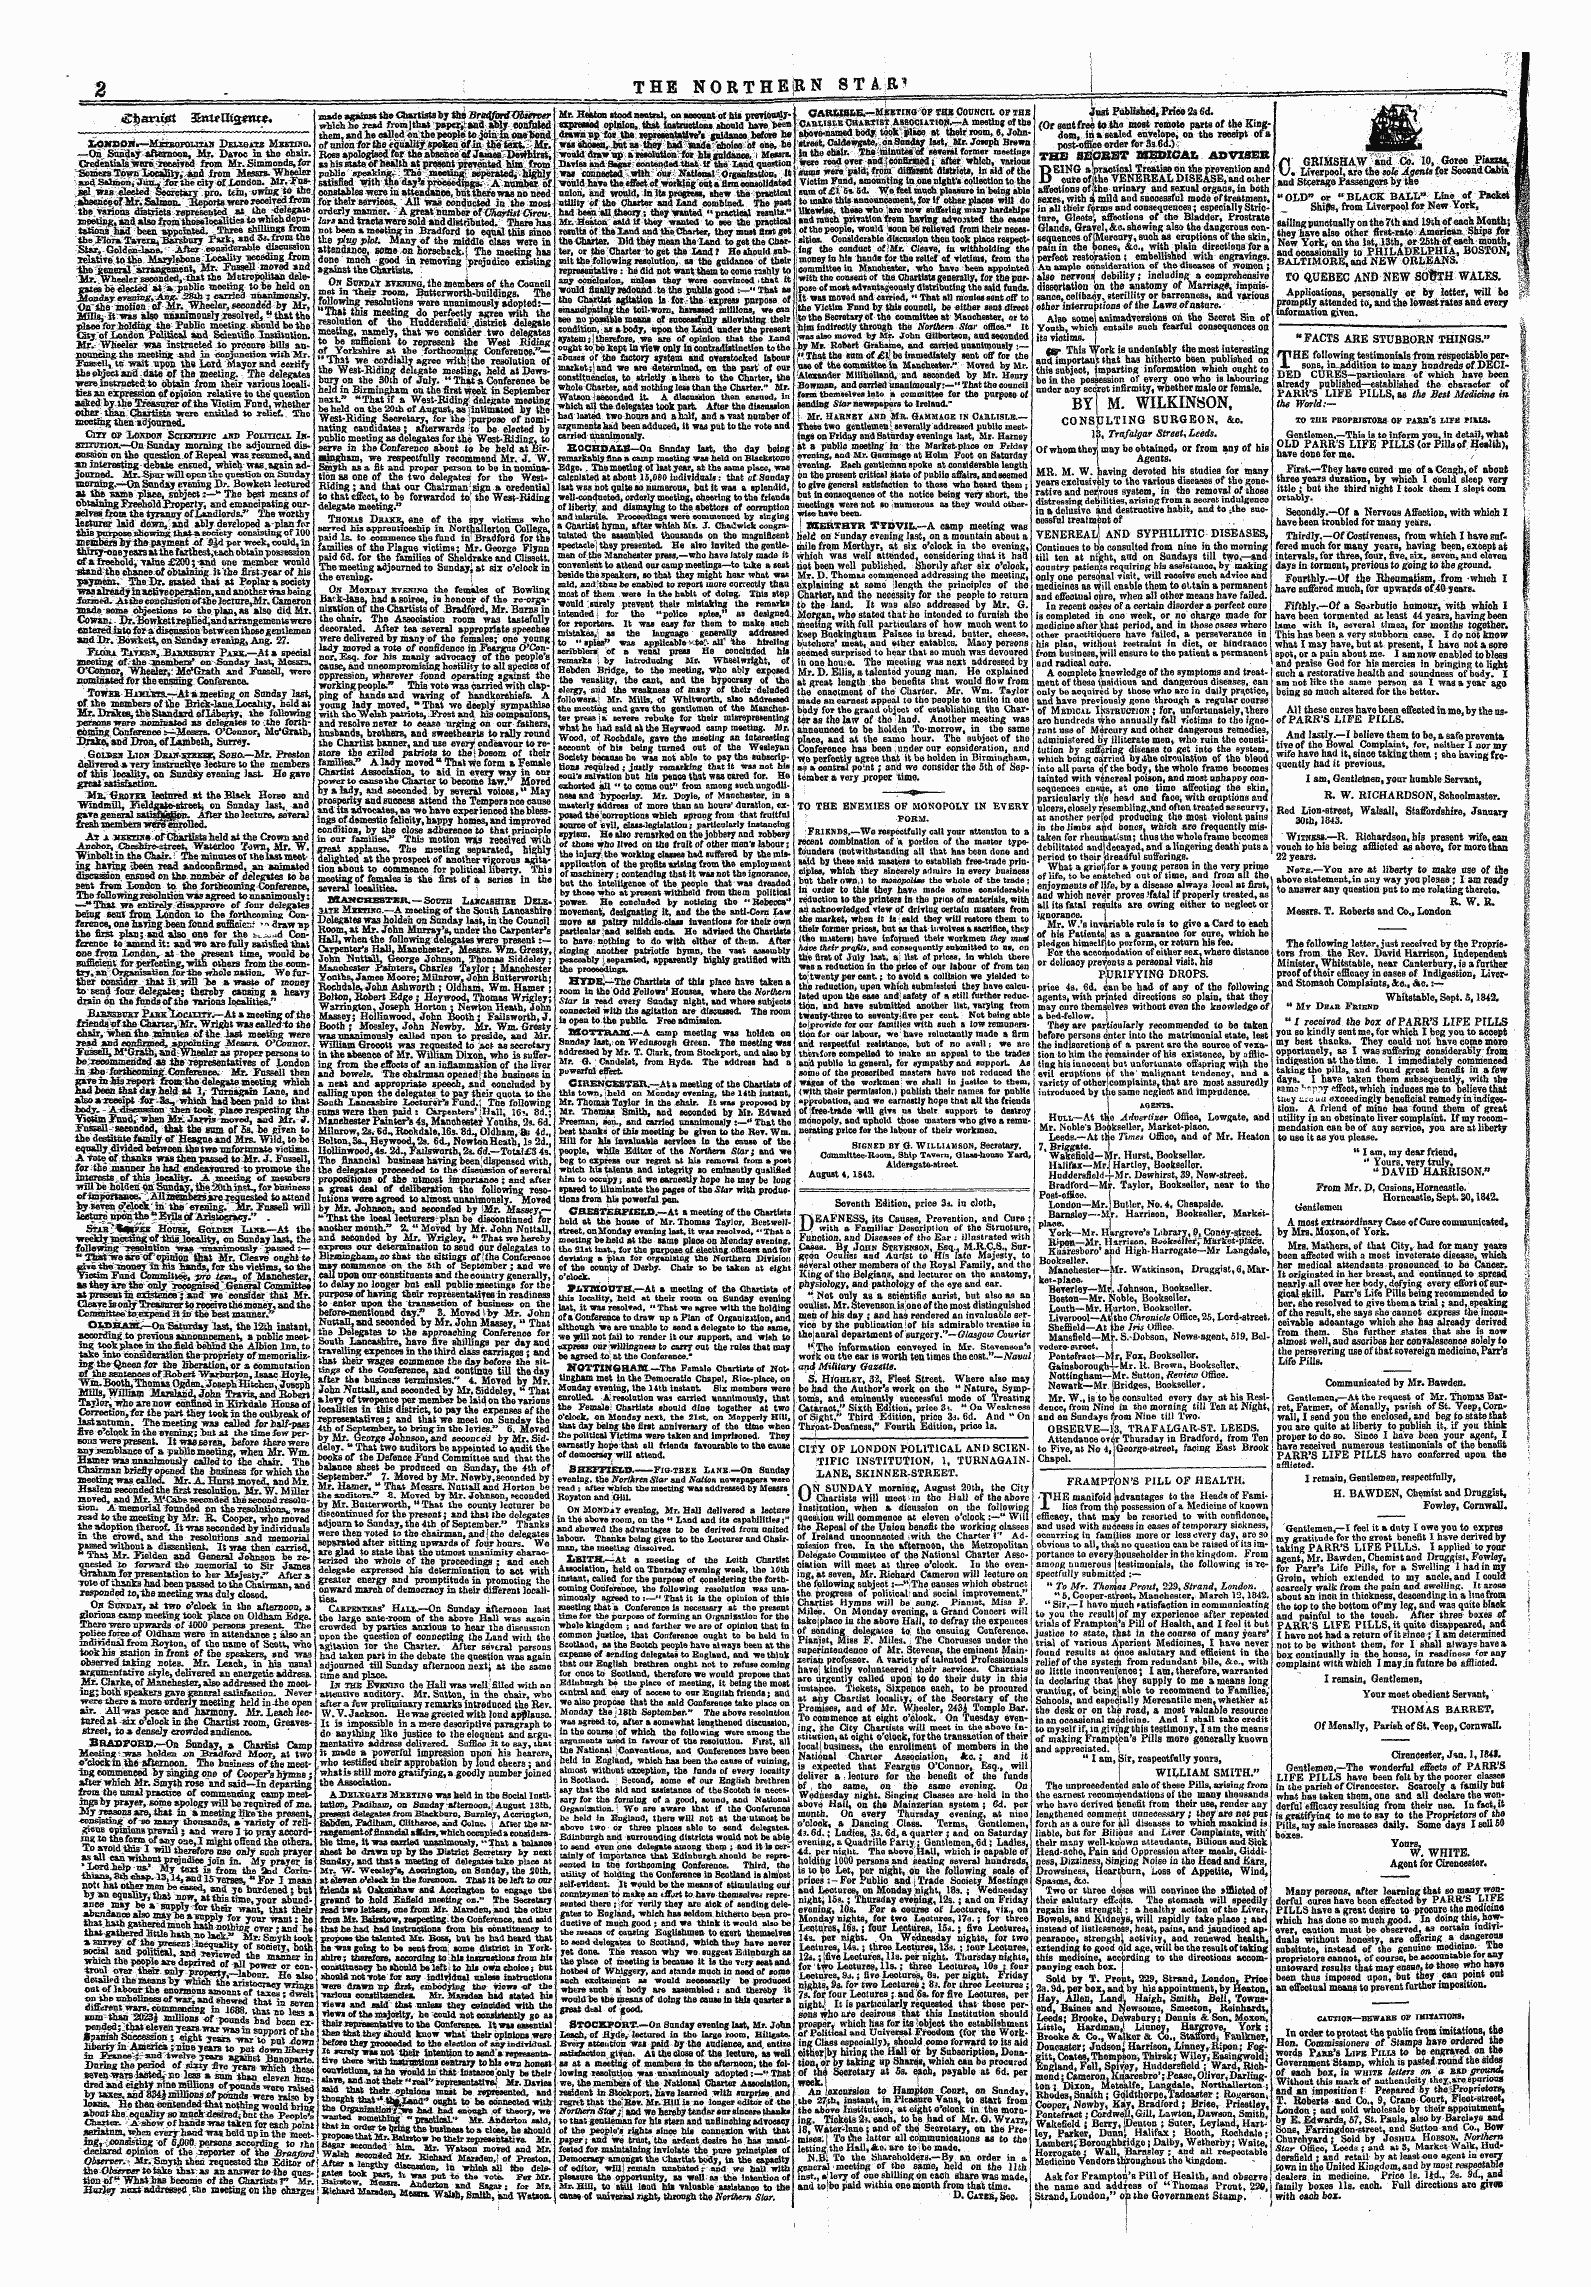 Northern Star (1837-1852): jS F Y, 2nd edition - £I)Ari^T 3£Nlrritc«W*«